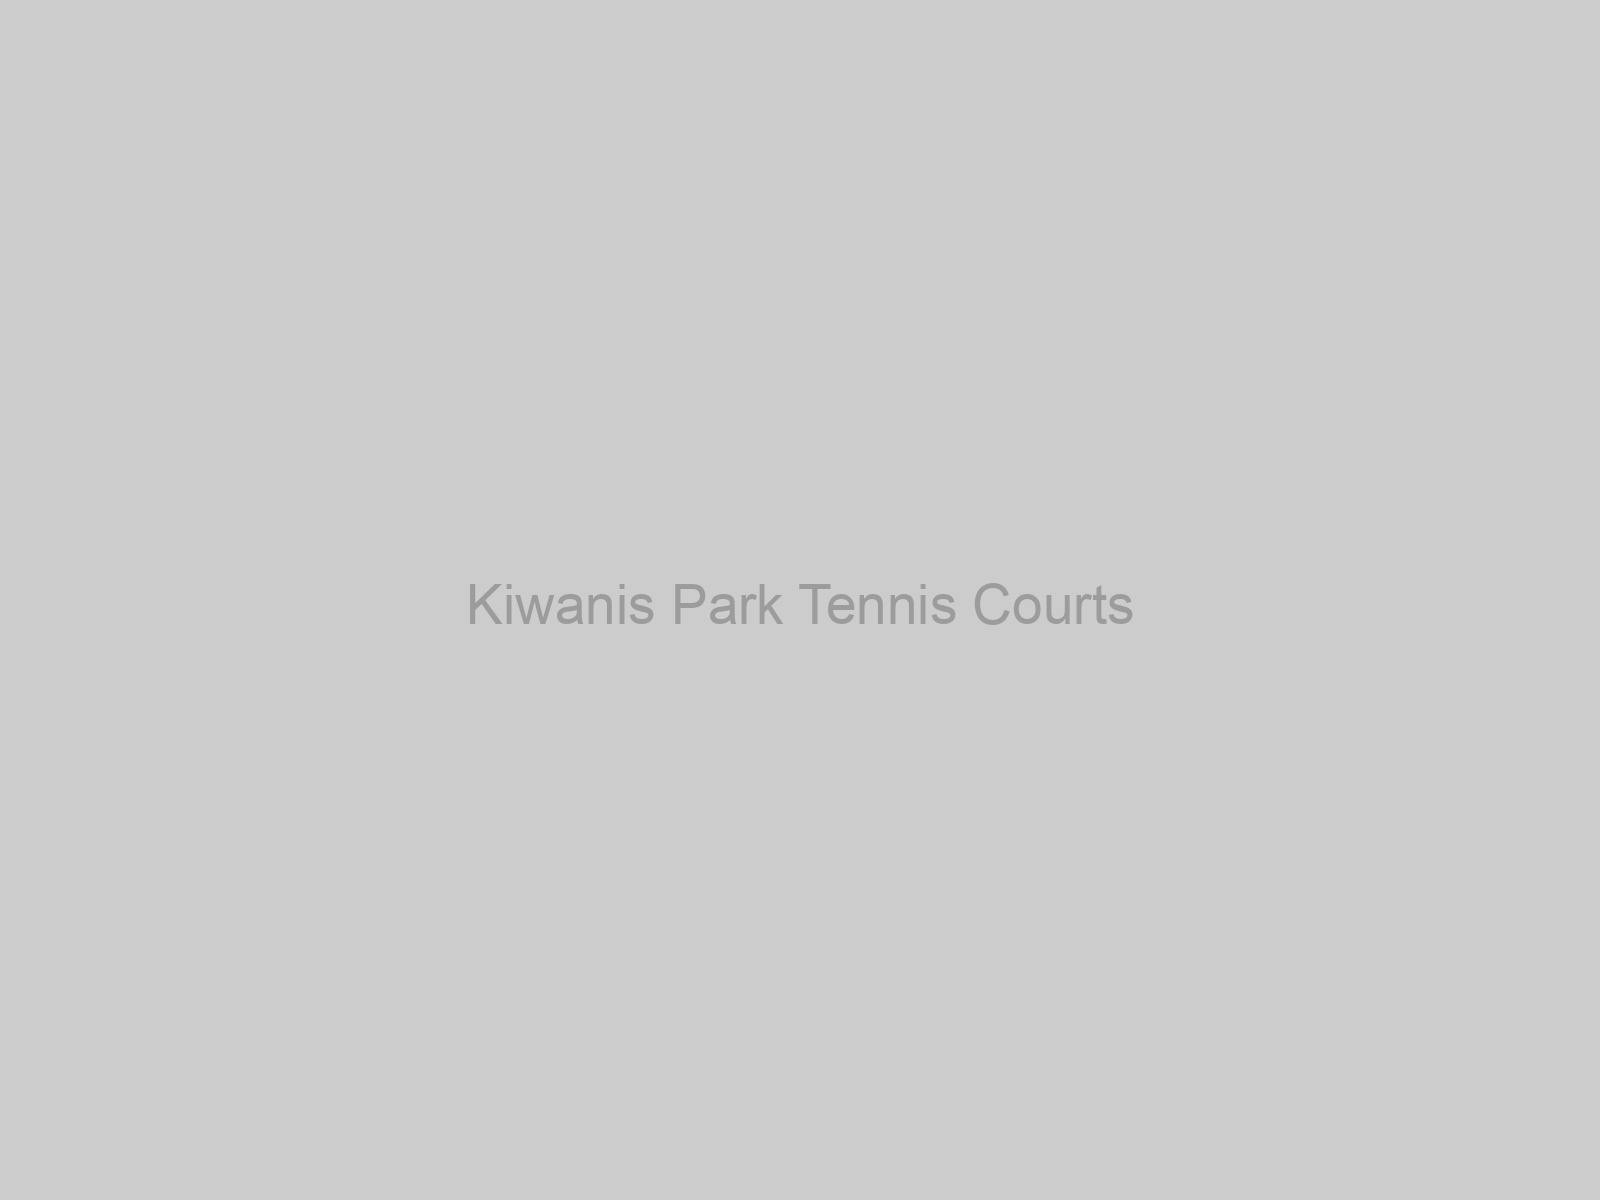 Kiwanis Park Tennis Courts